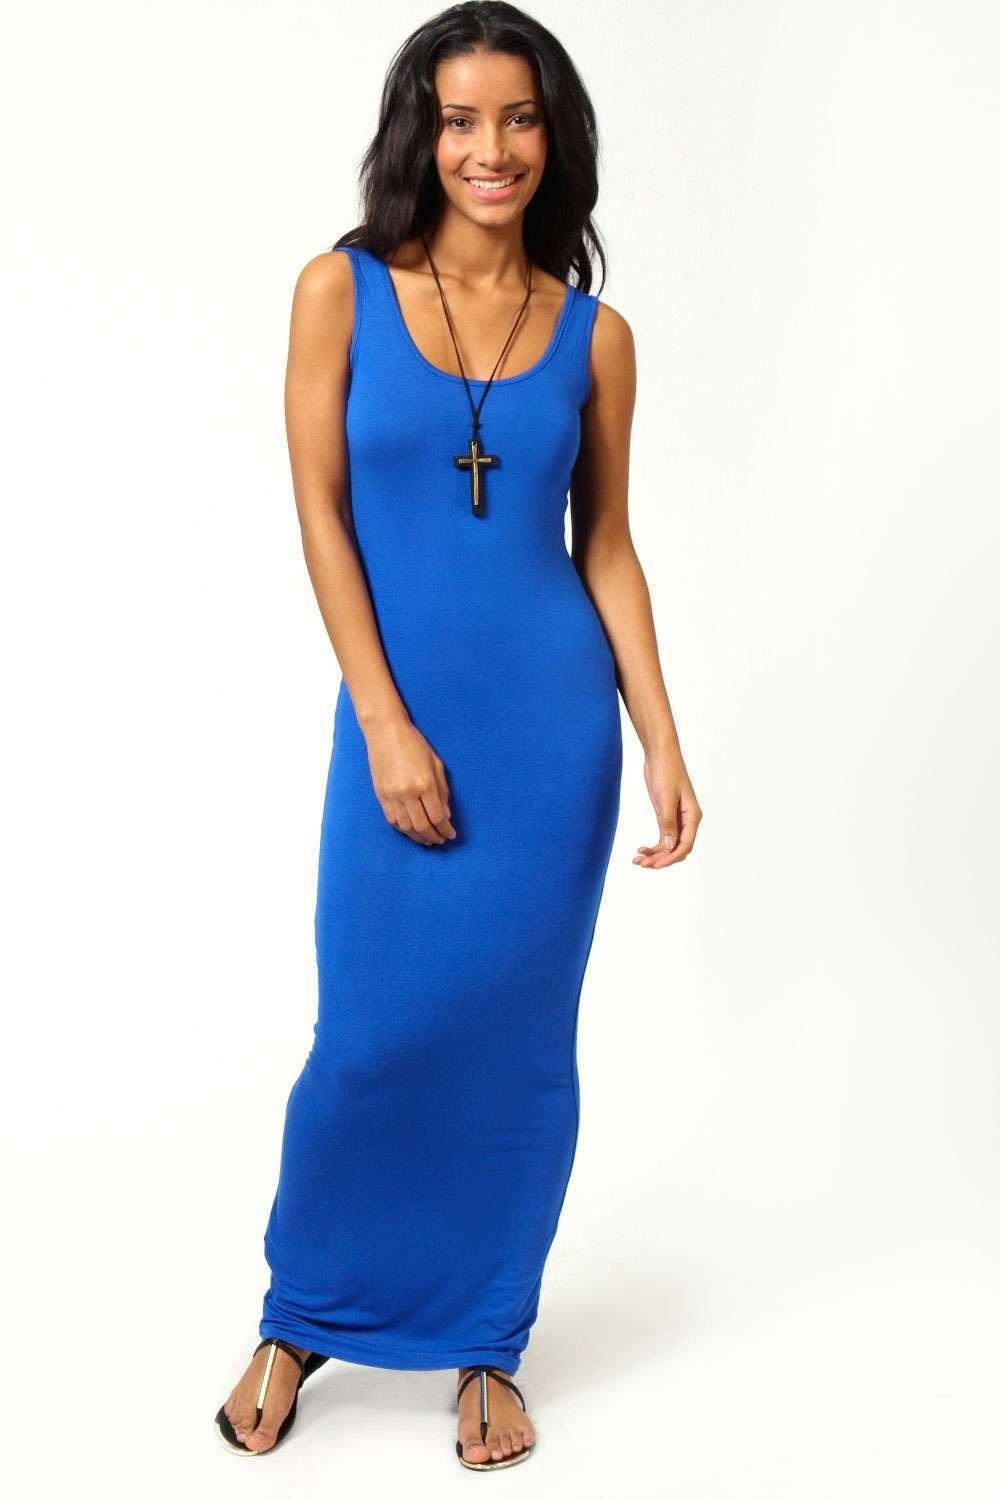 Lyst - Boohoo Petite Sandy Scoop Neck Maxi Dress in Blue